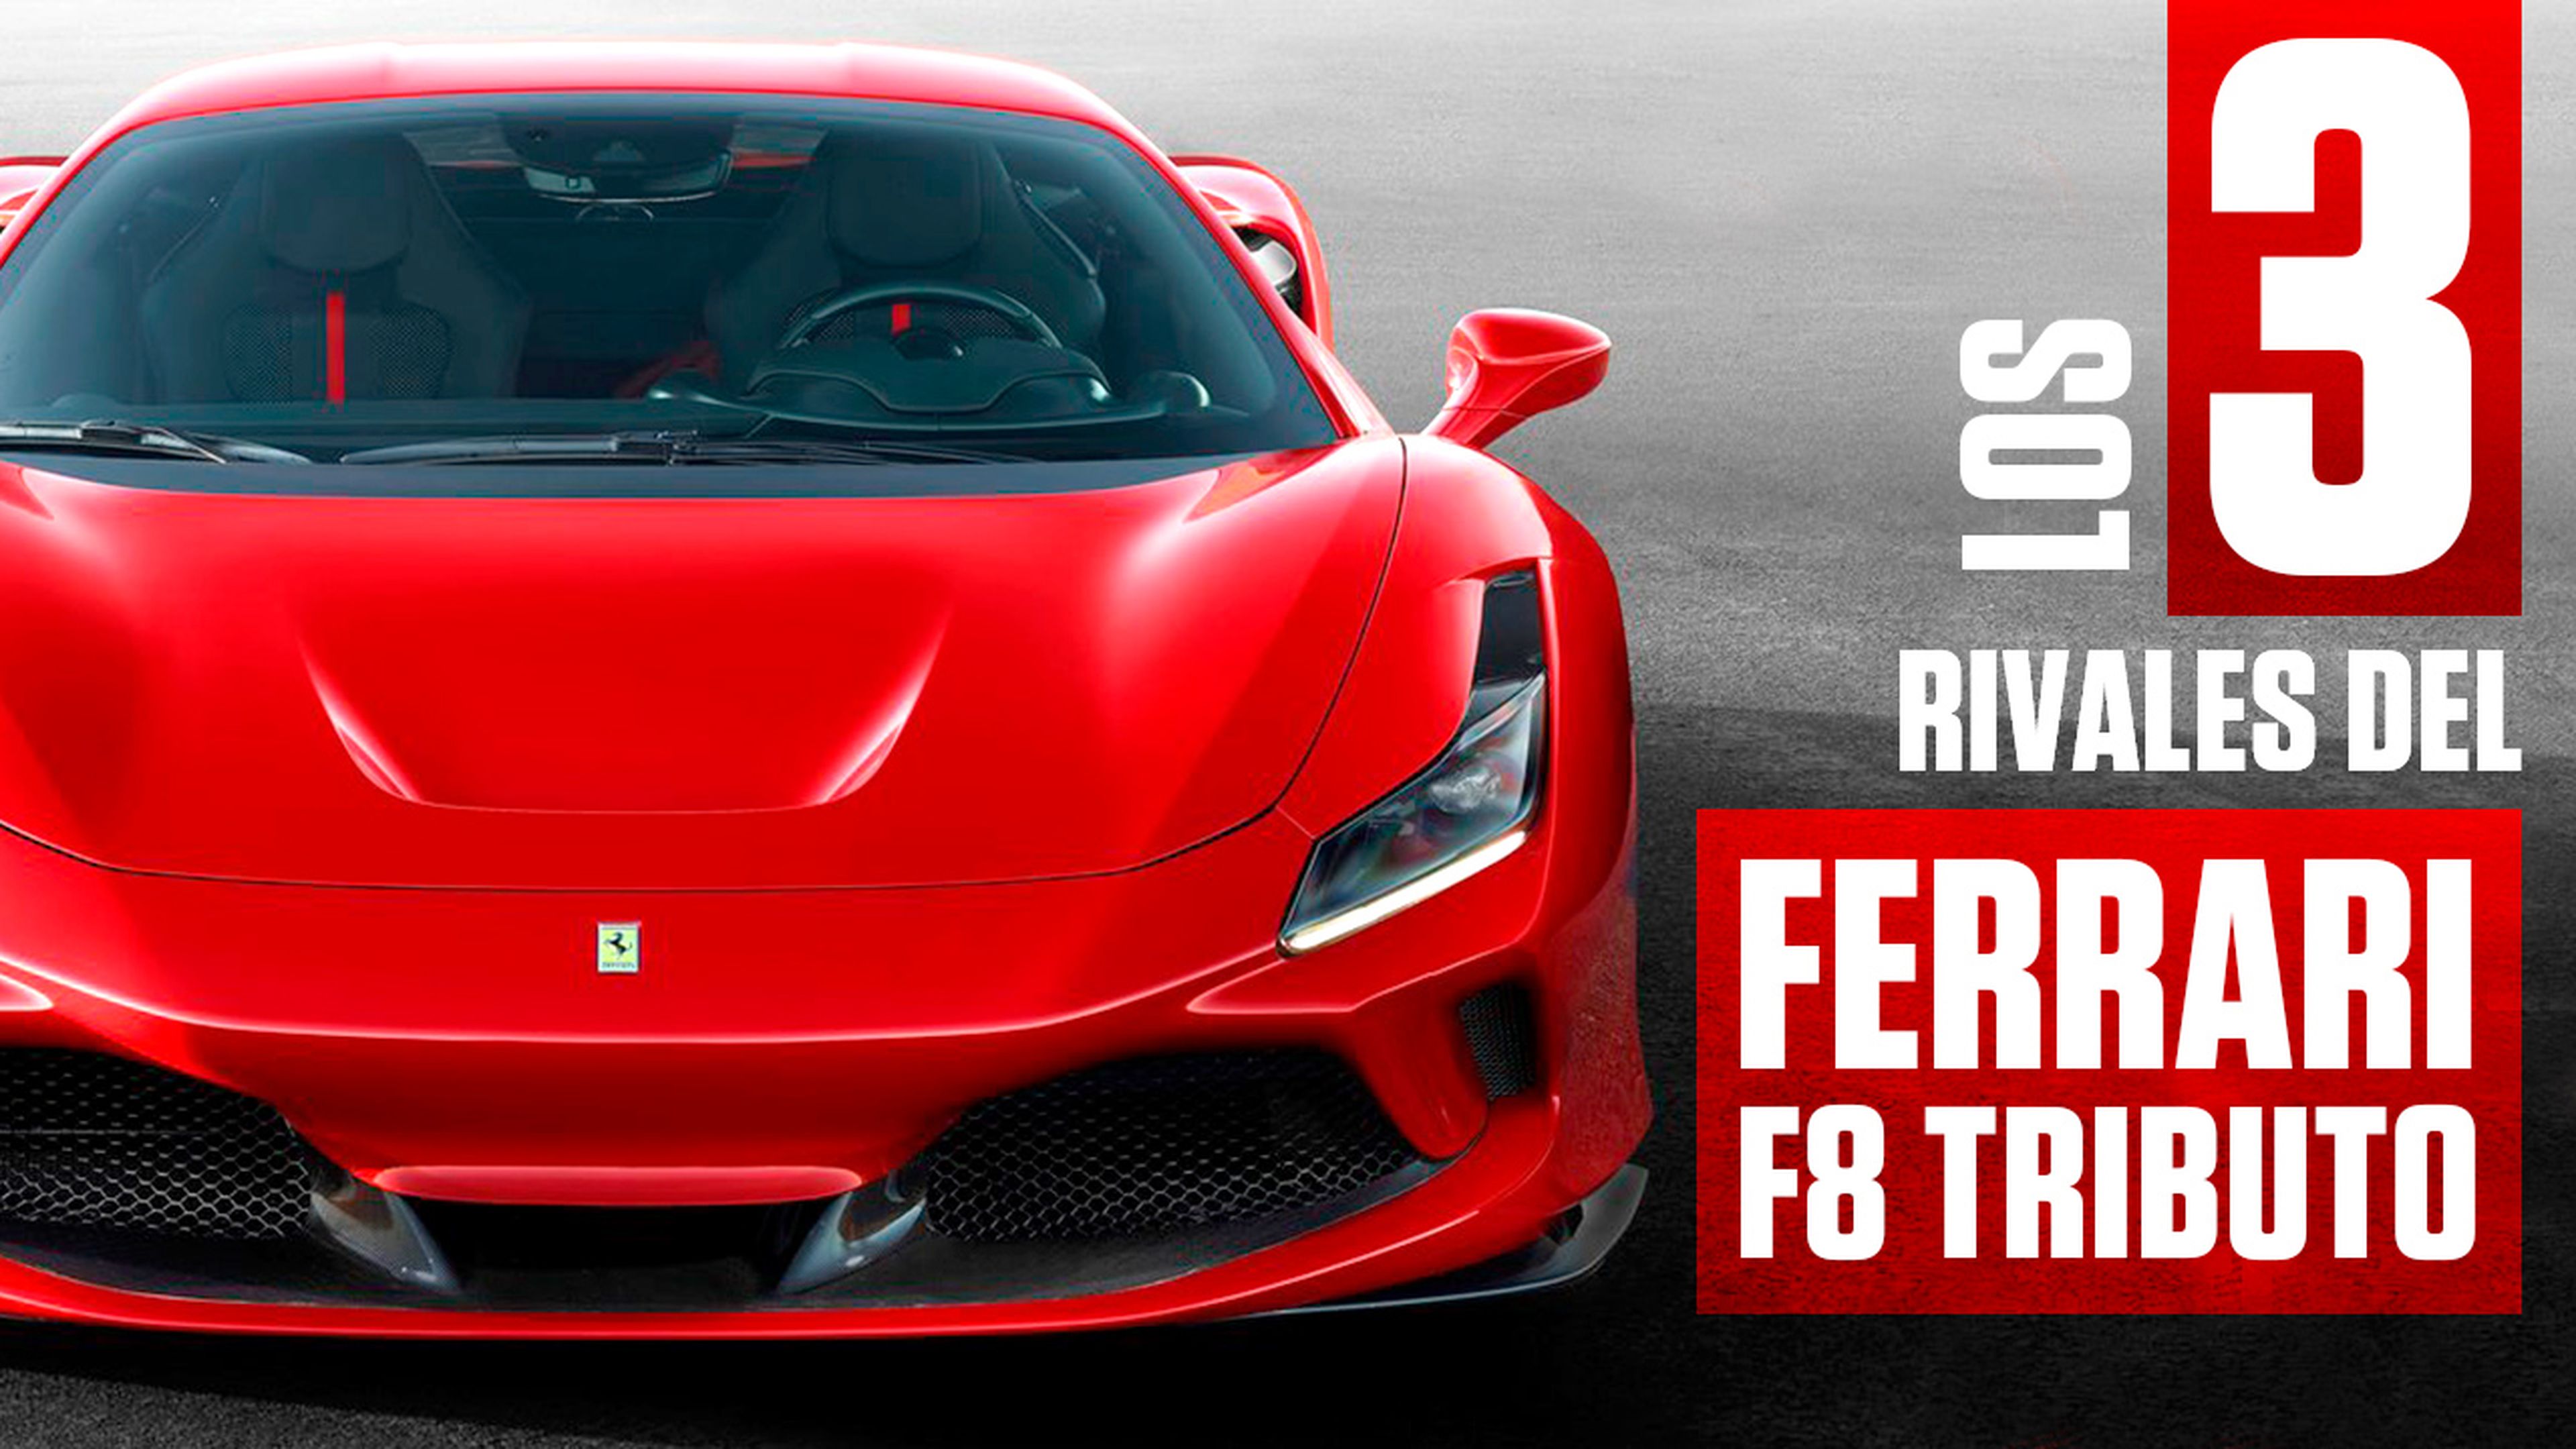 VÍDEO: Los 3 rivales más duros del Ferrari F8 Tributo